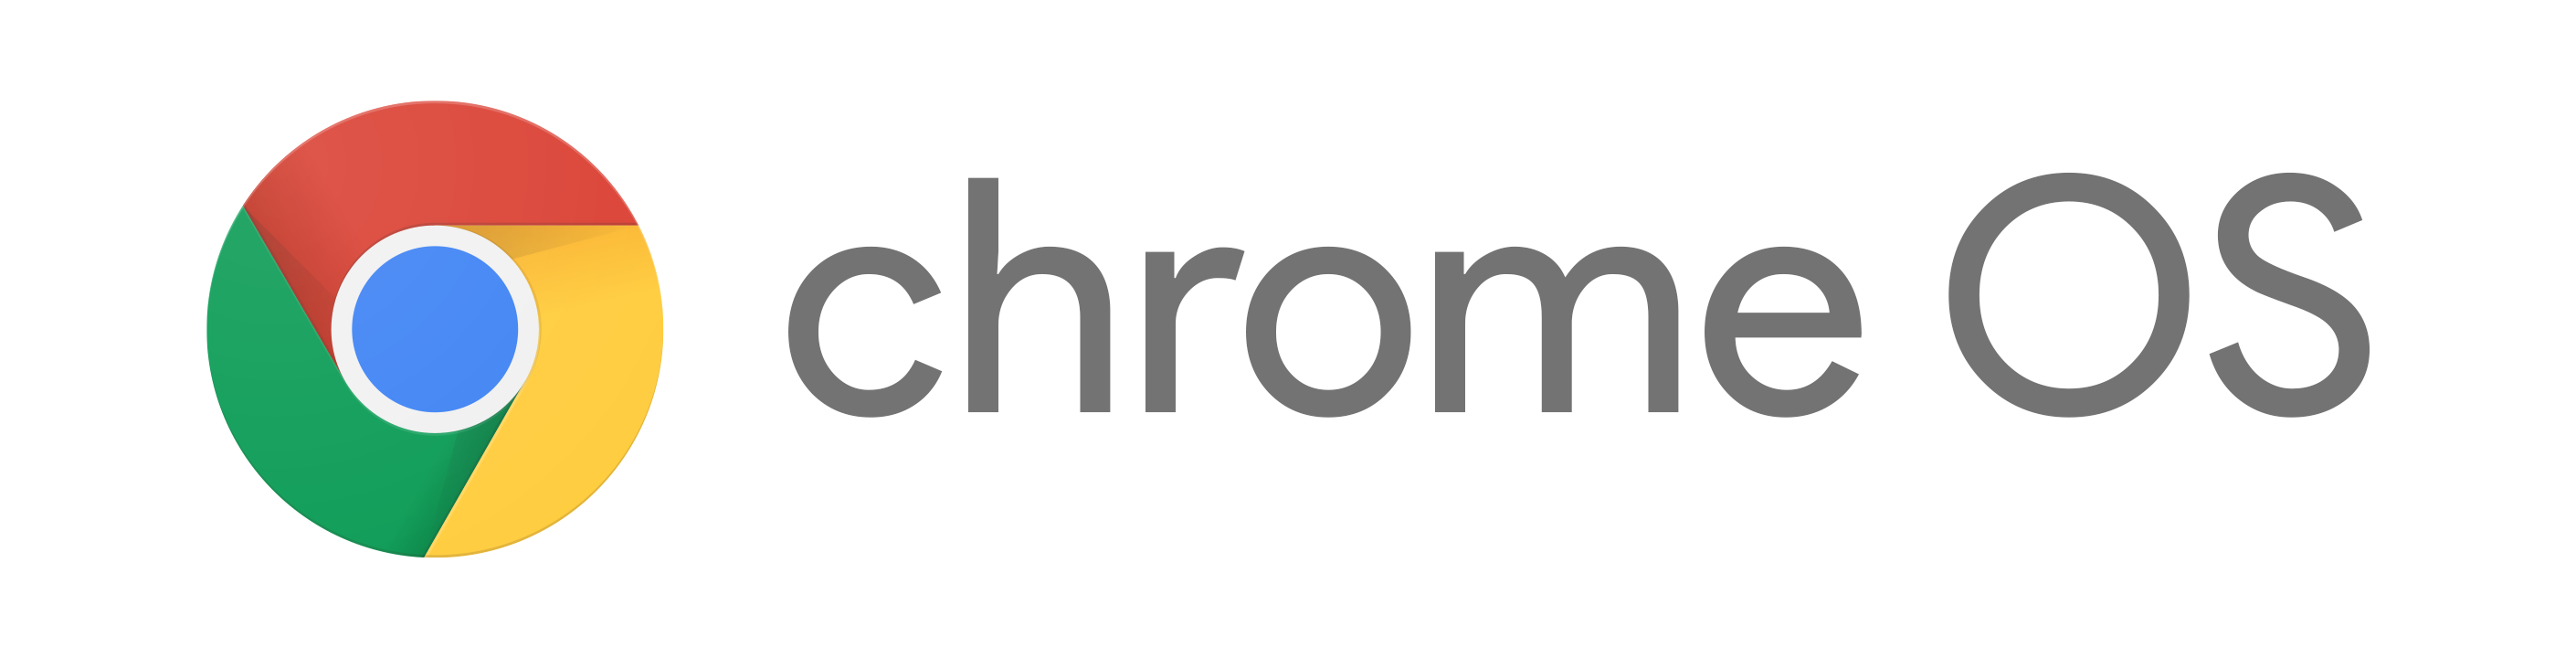 Chromebook - Wikipedia